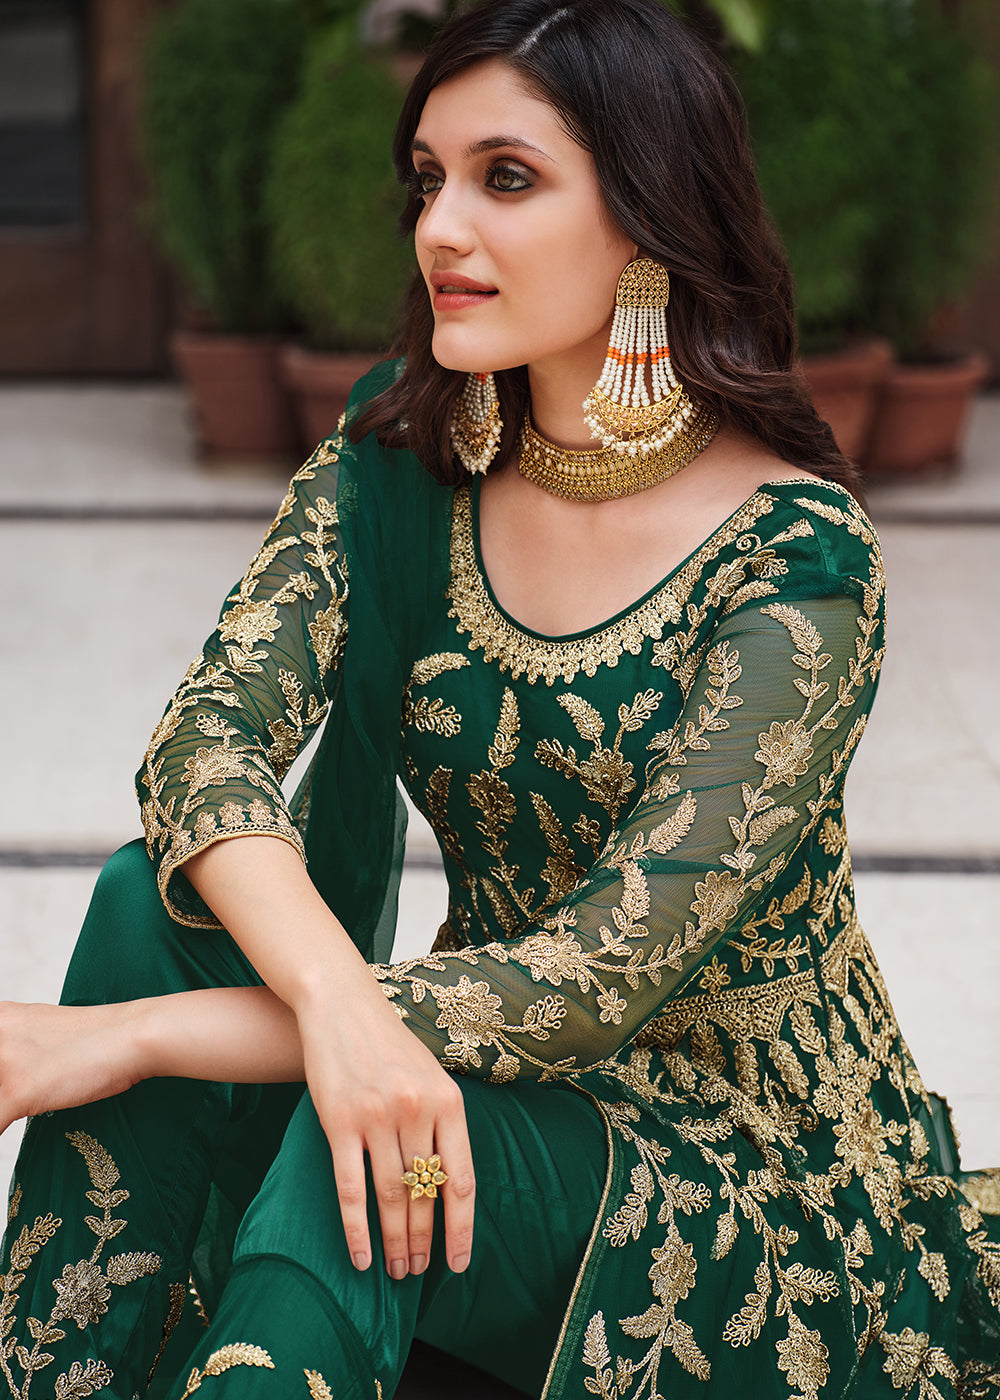 Buy Now Lovely Bottle Green Designer Front Slit Anarkali Dress Online in USA, UK, Australia, New Zealand, Canada & Worldwide at Empress Clothing. 